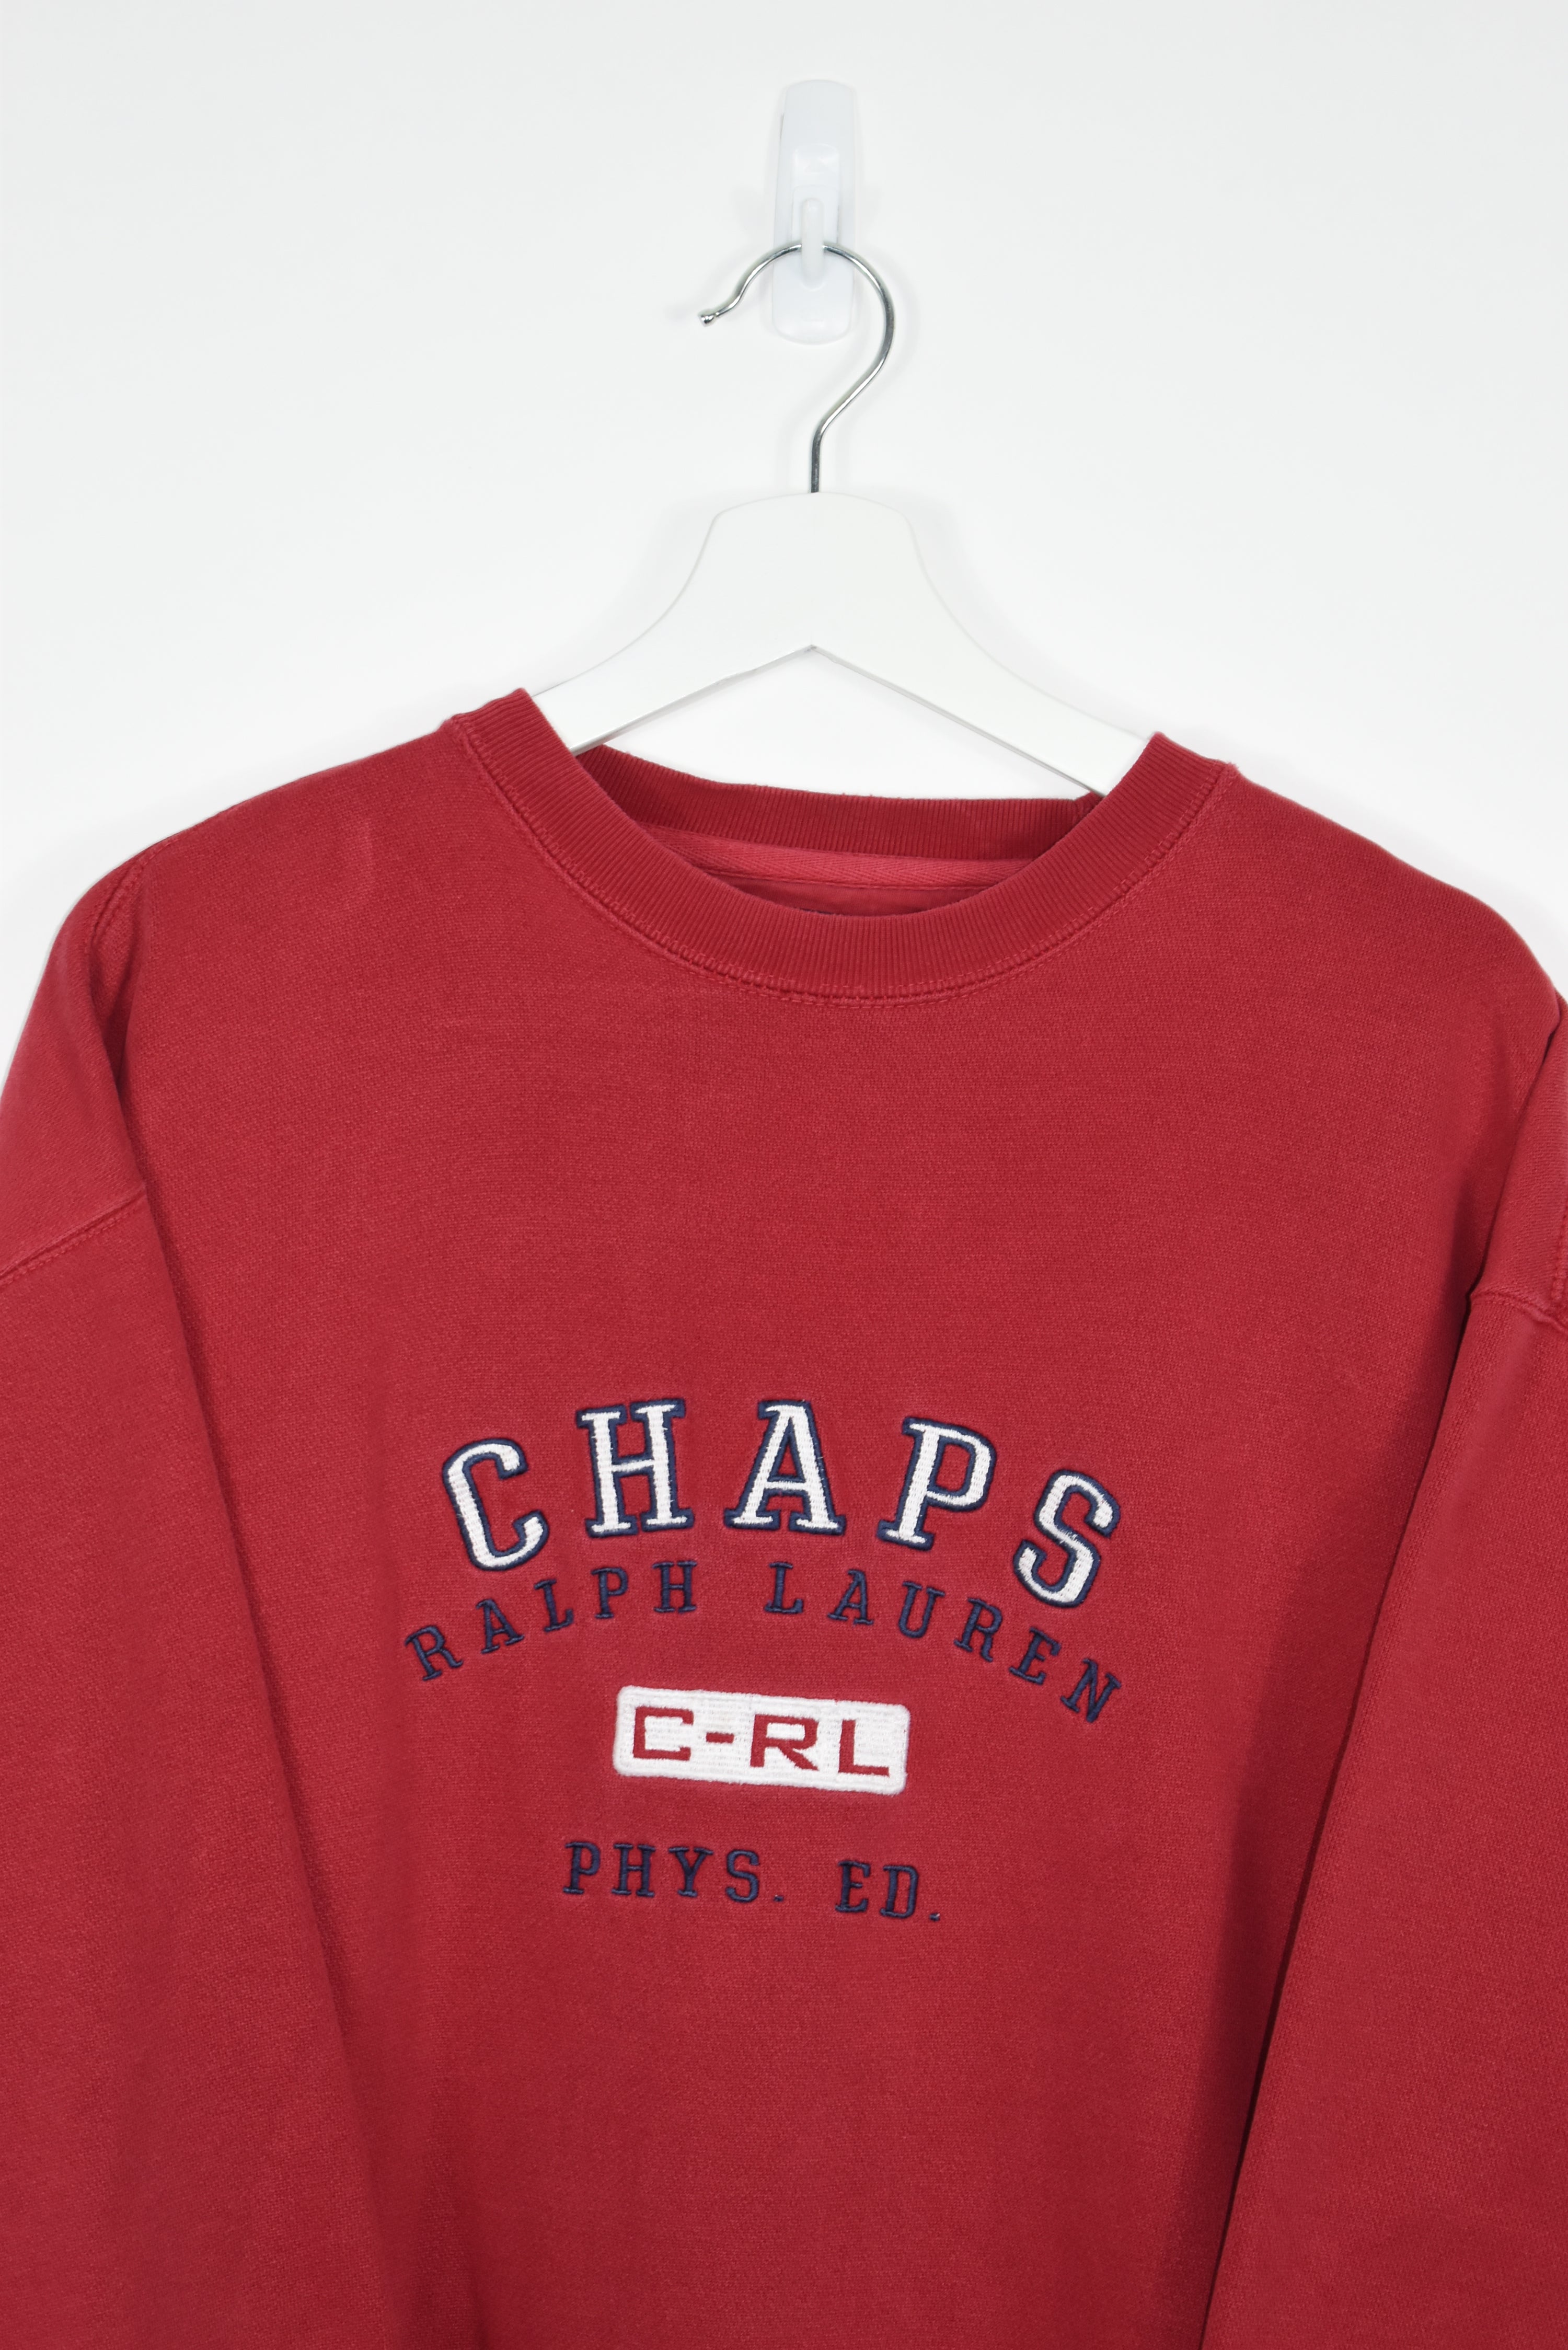 Vintage Chaps Ralph Lauren Embroidery Sweatshirt Large (Baggy)